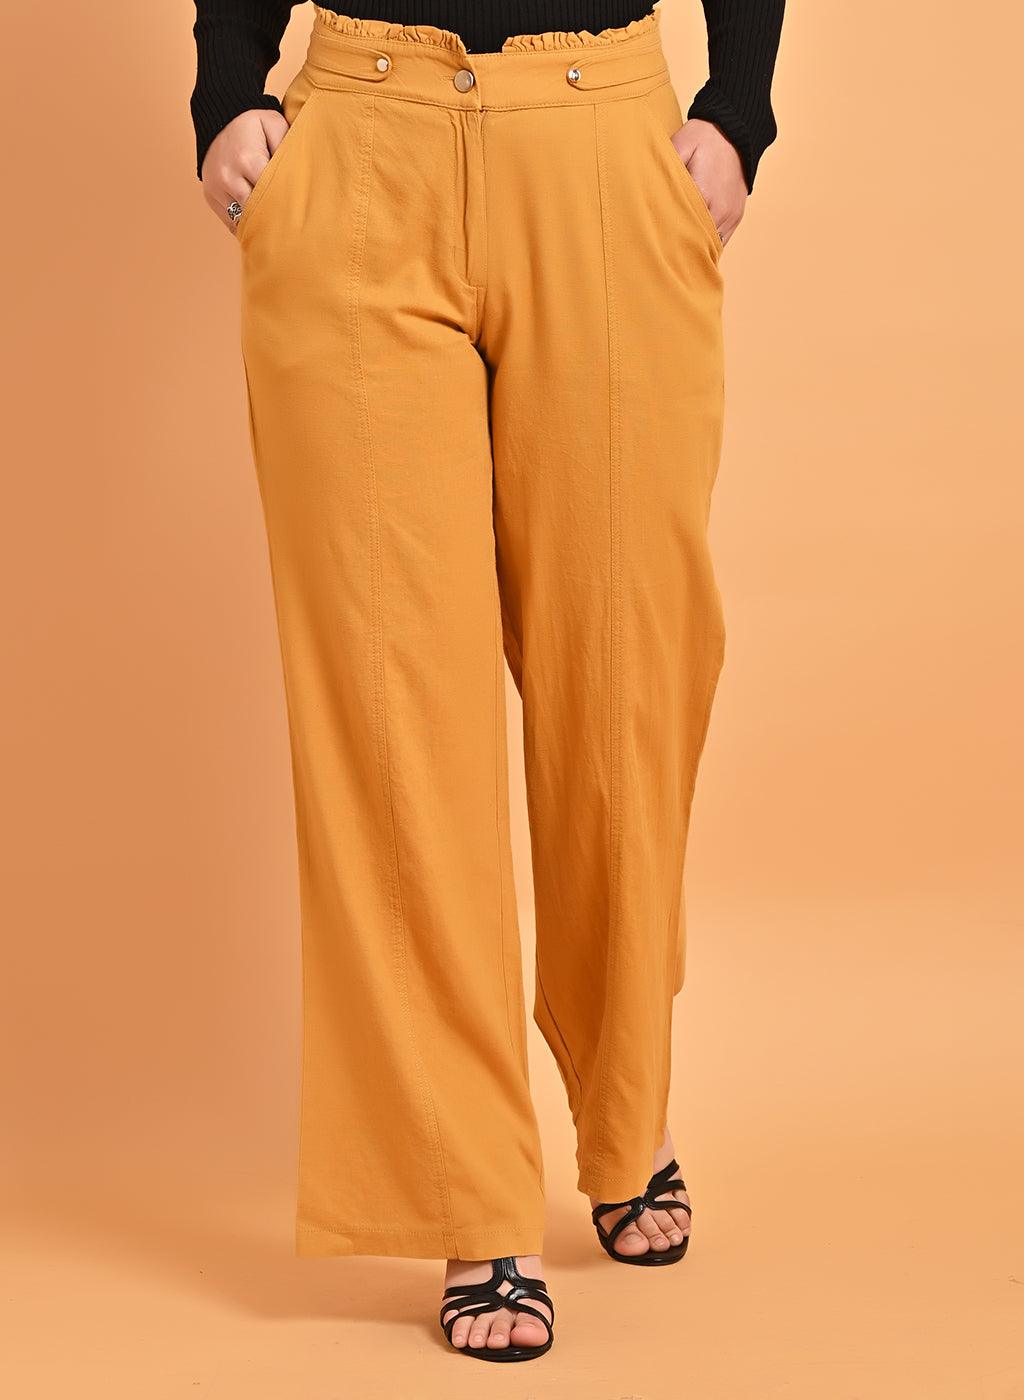 Shop Varieties of Pants & Trousers for Women Online